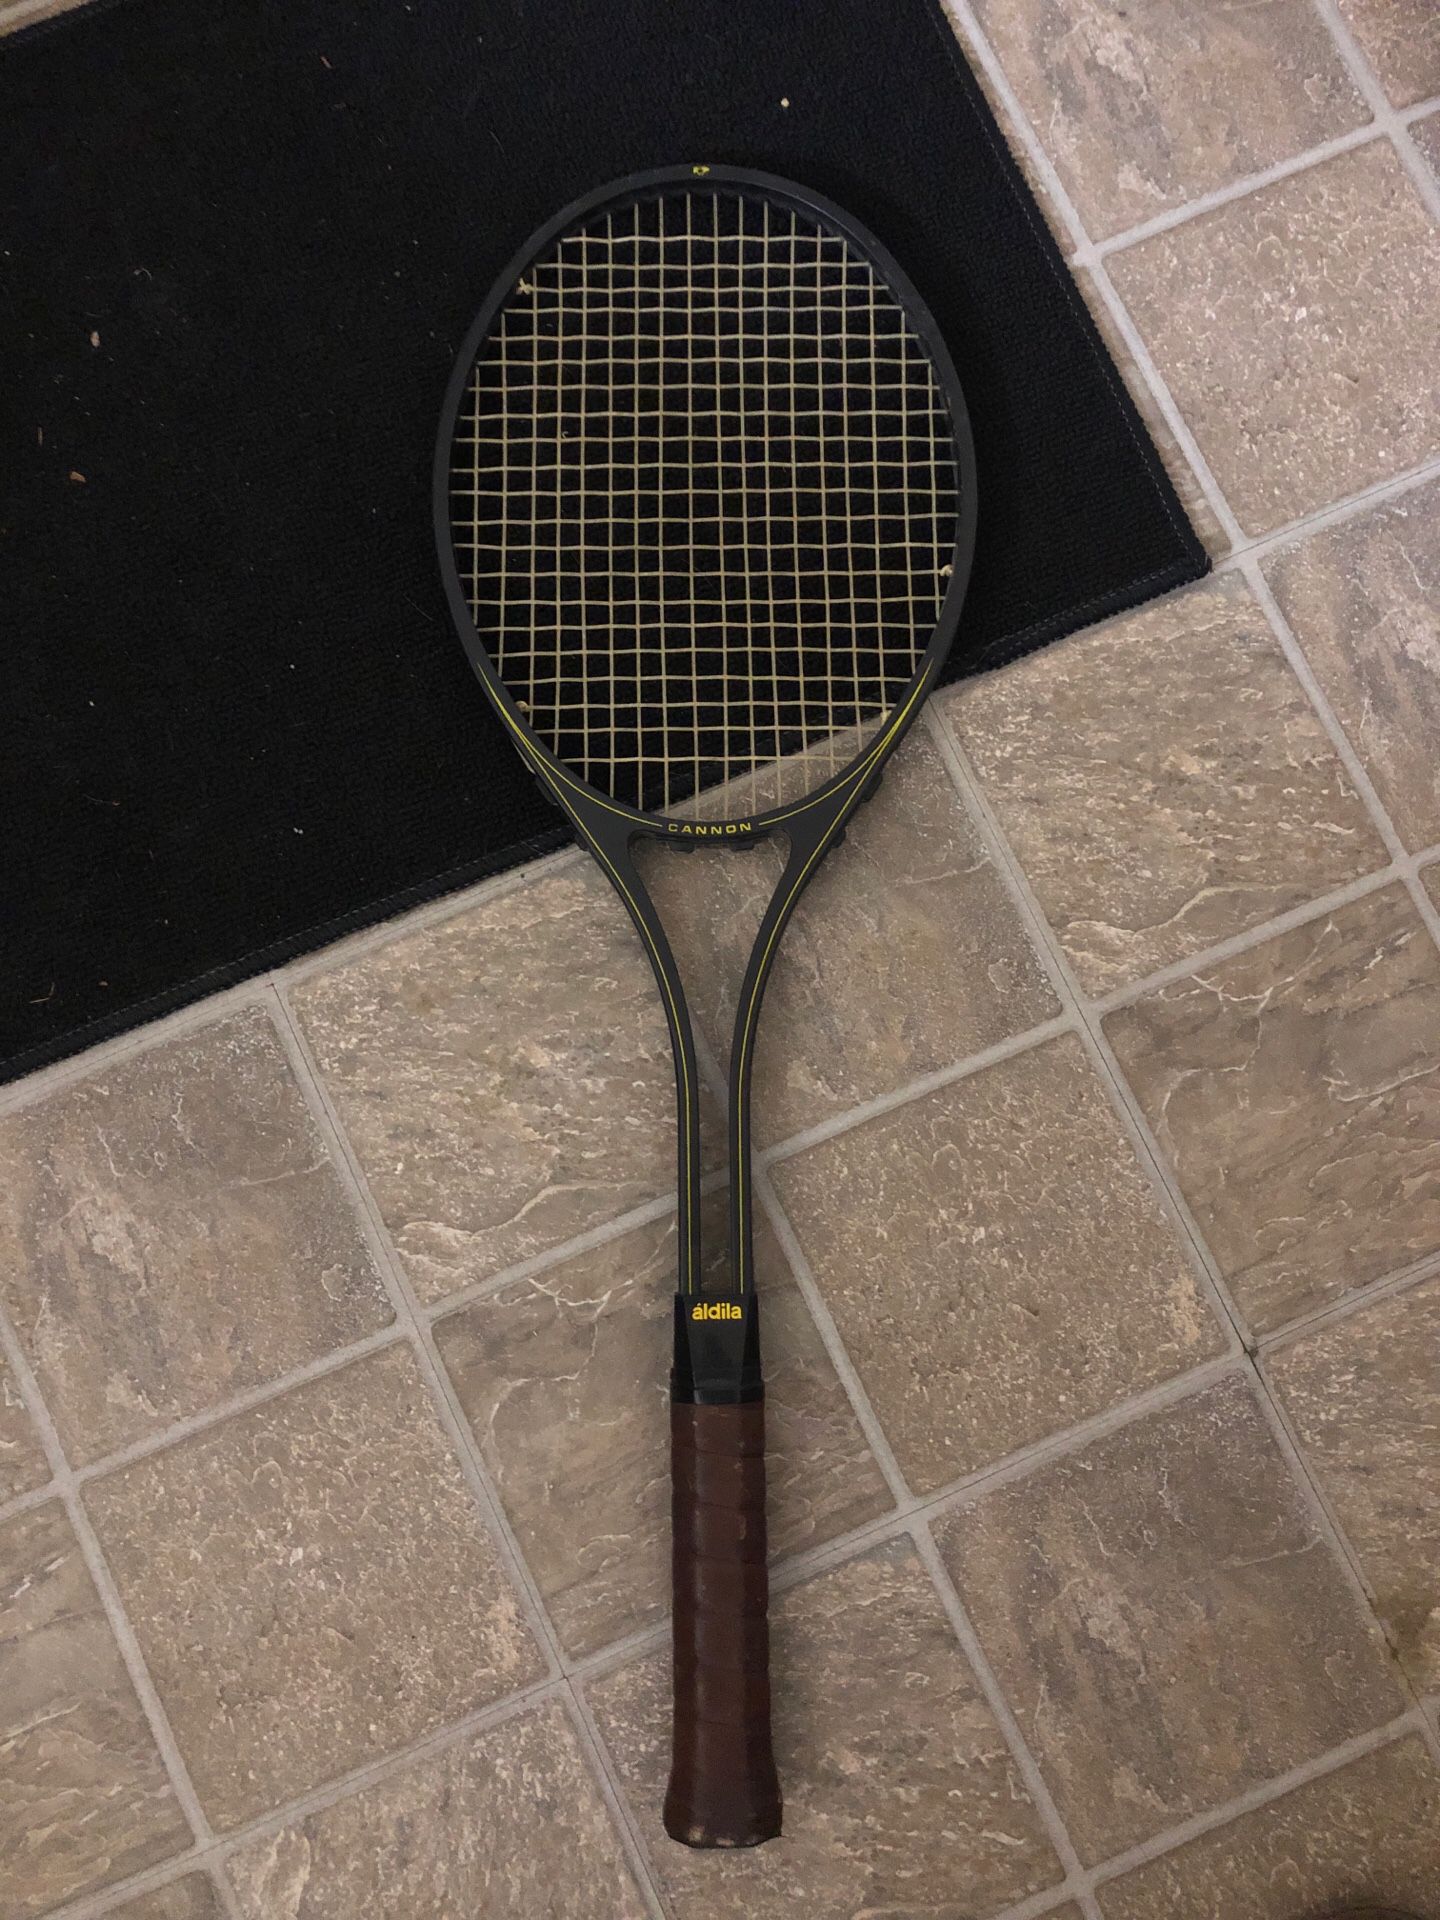 Tennis racket $ 10 obo